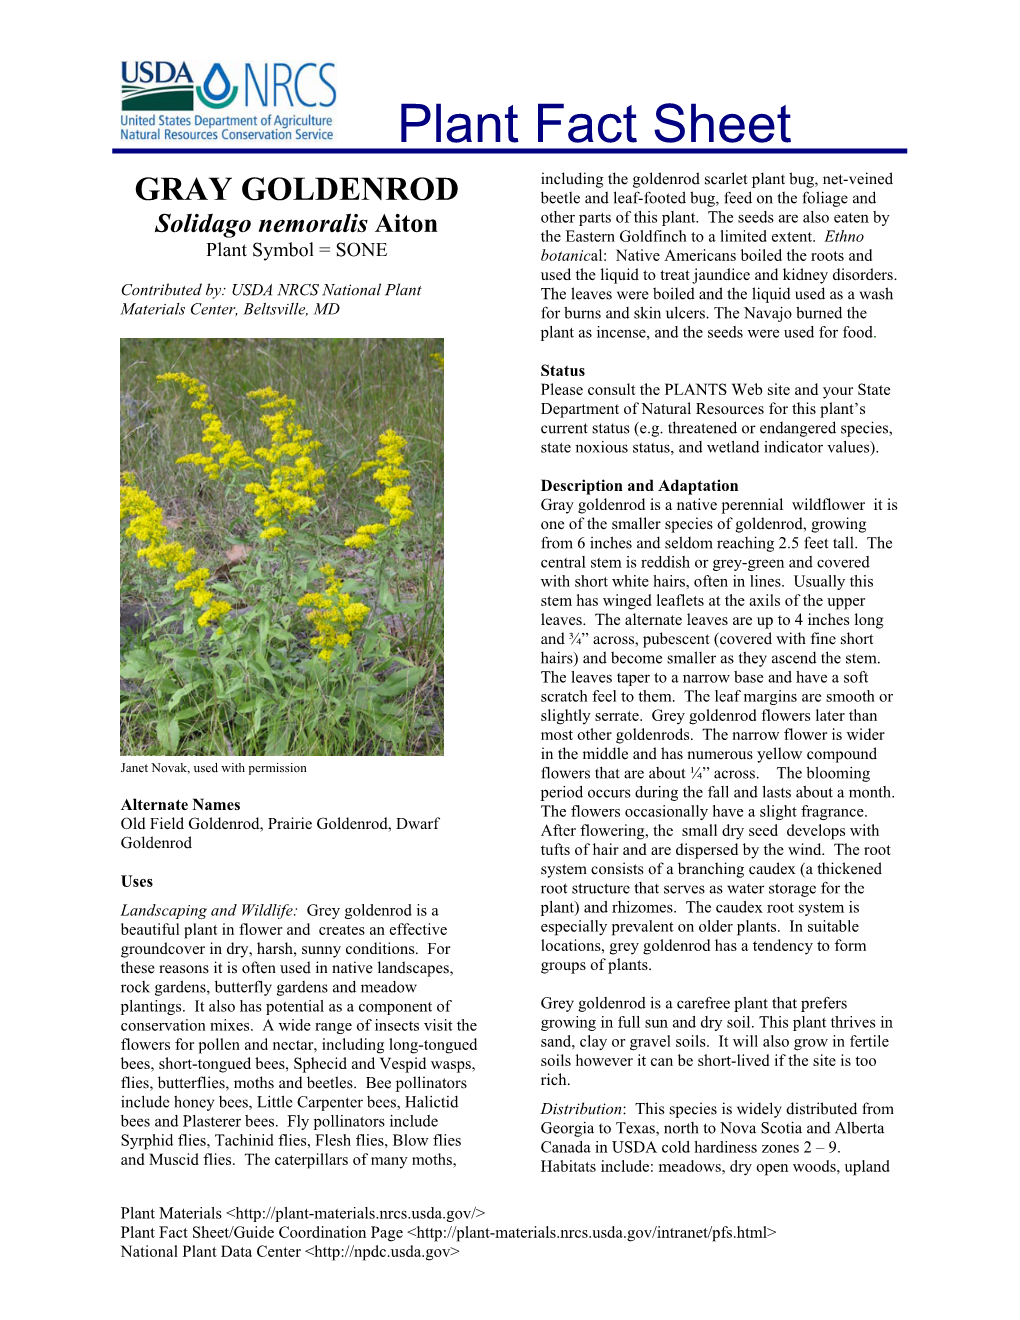 Gray Goldenrod (Solidago Nemoralis)